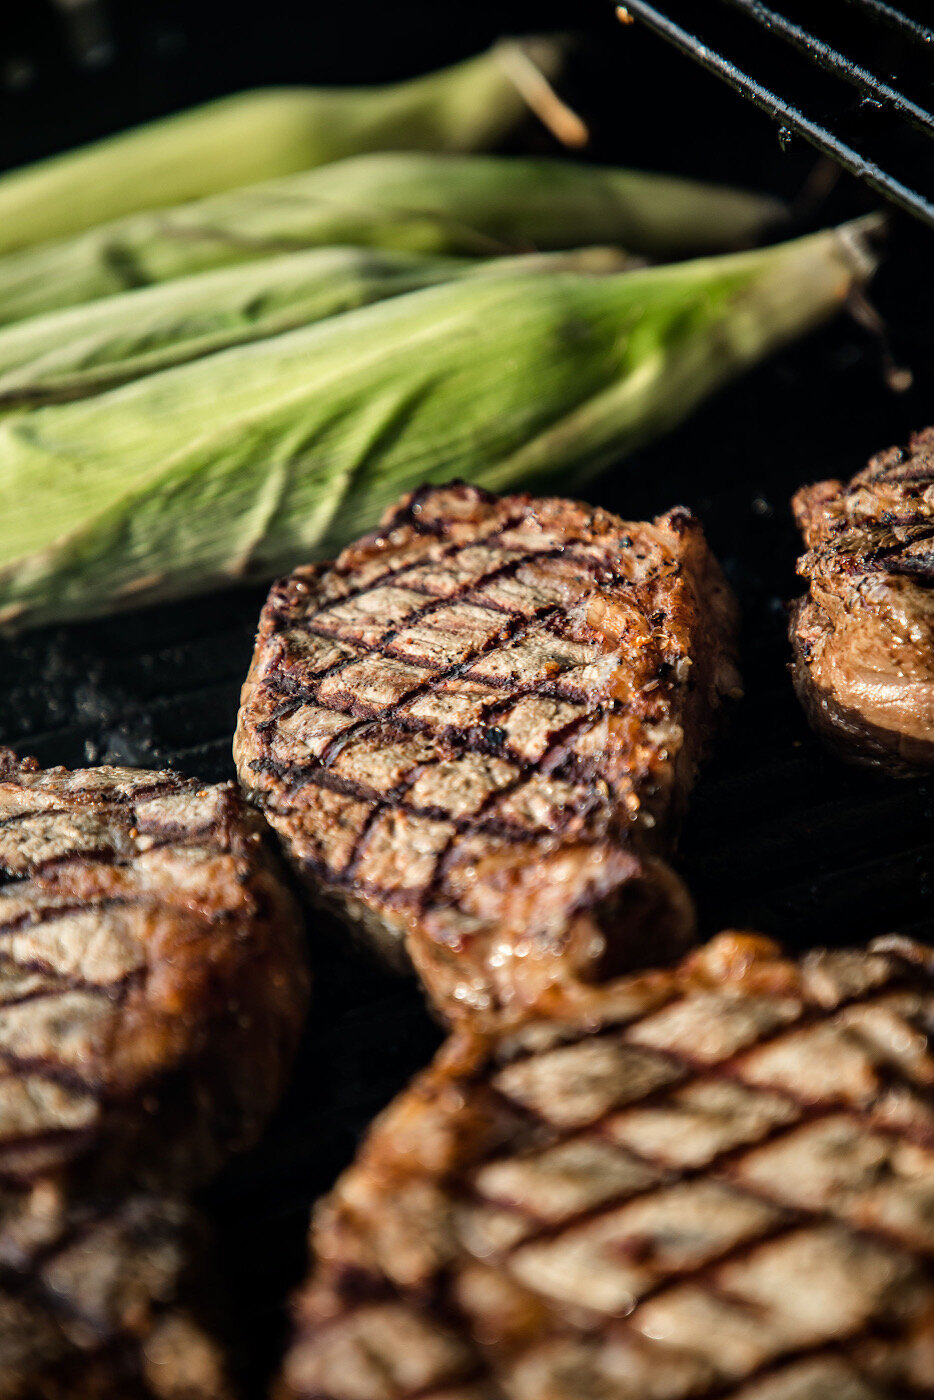 The Hoosier Chop Box — Hoosier Steaks